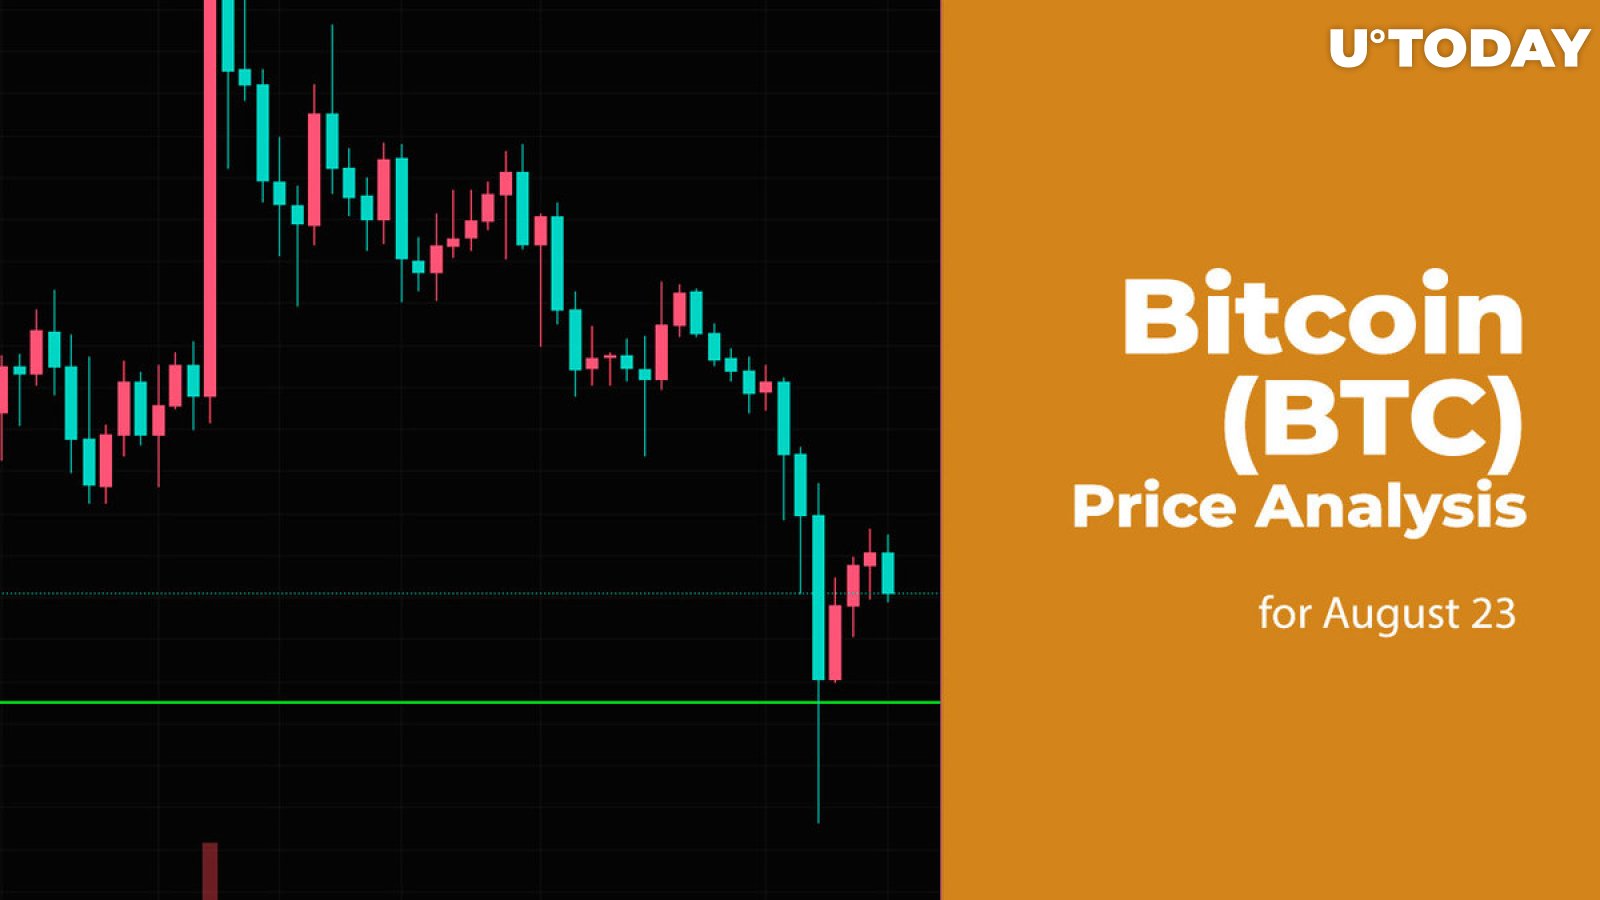 Bitcoin (BTC) Price Analysis for August 23